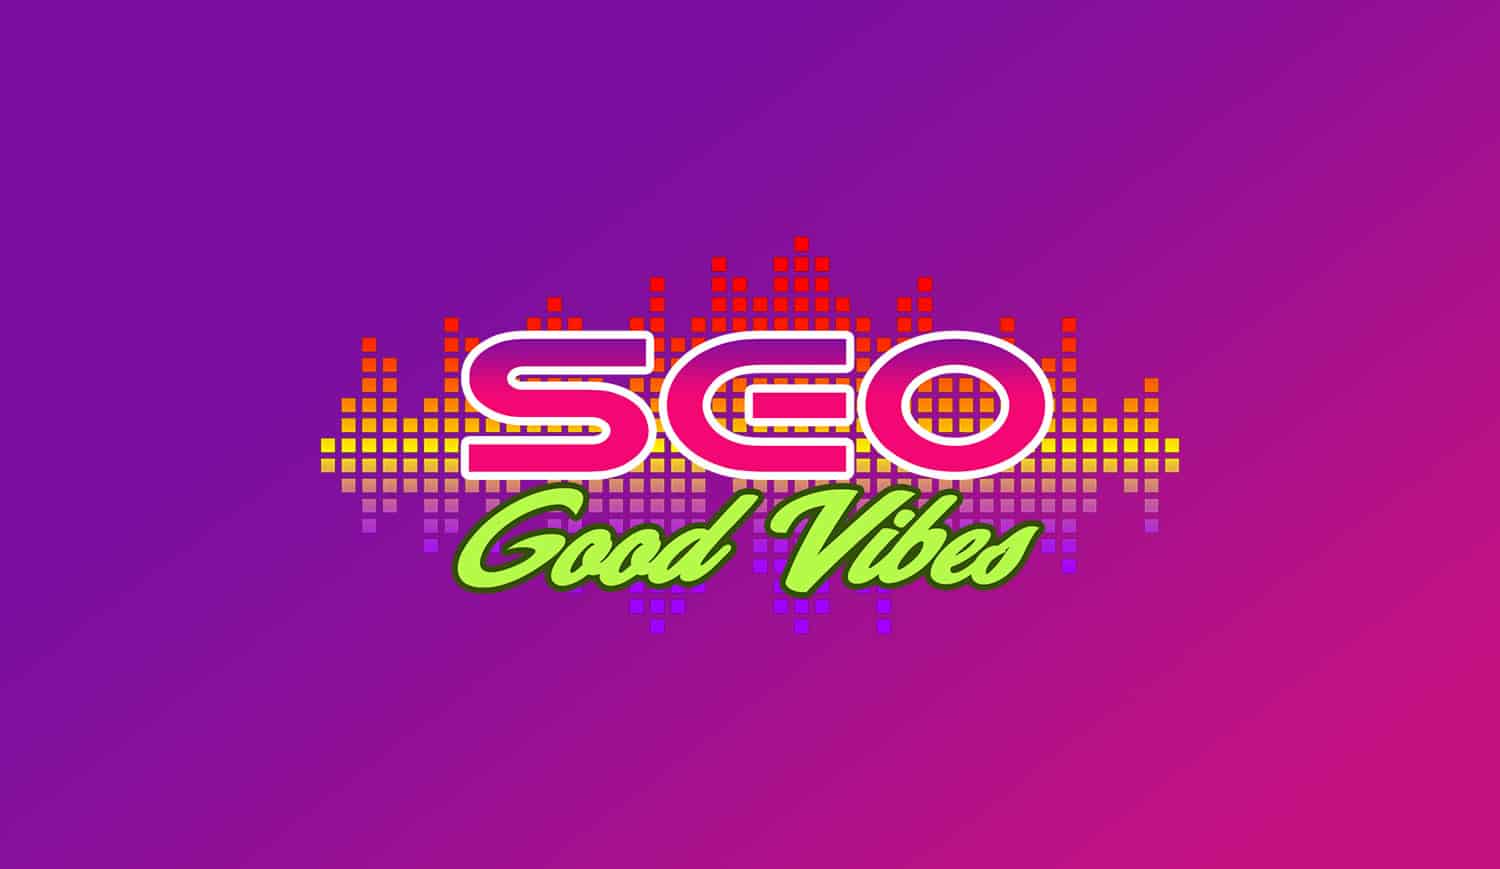 SEO Good Vibes 2020